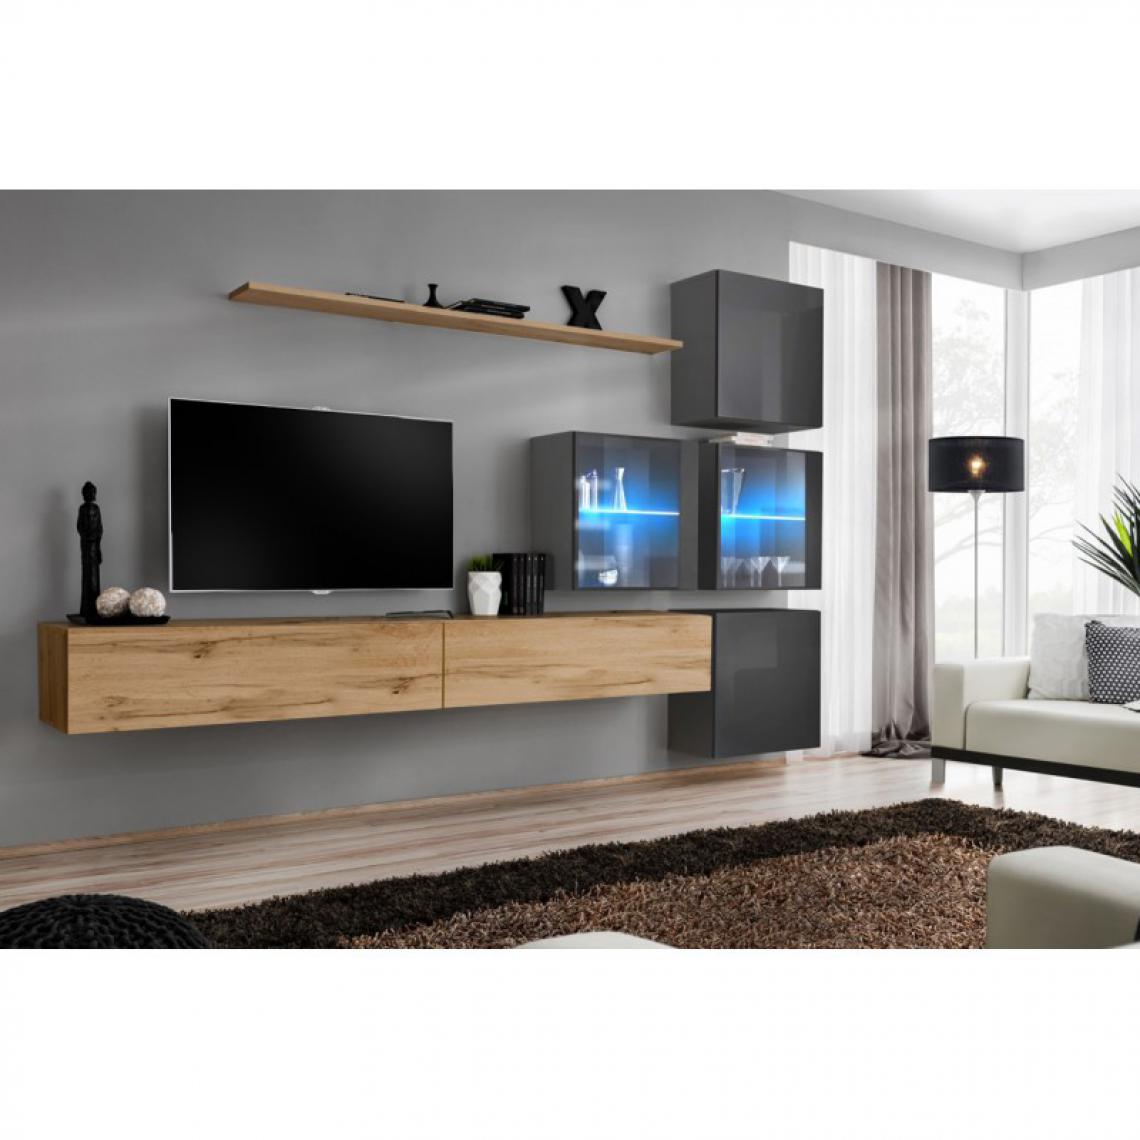 Ac-Deco - Meuble TV Mural Design Switch XIX 310cm Naturel & Gris - Meubles TV, Hi-Fi